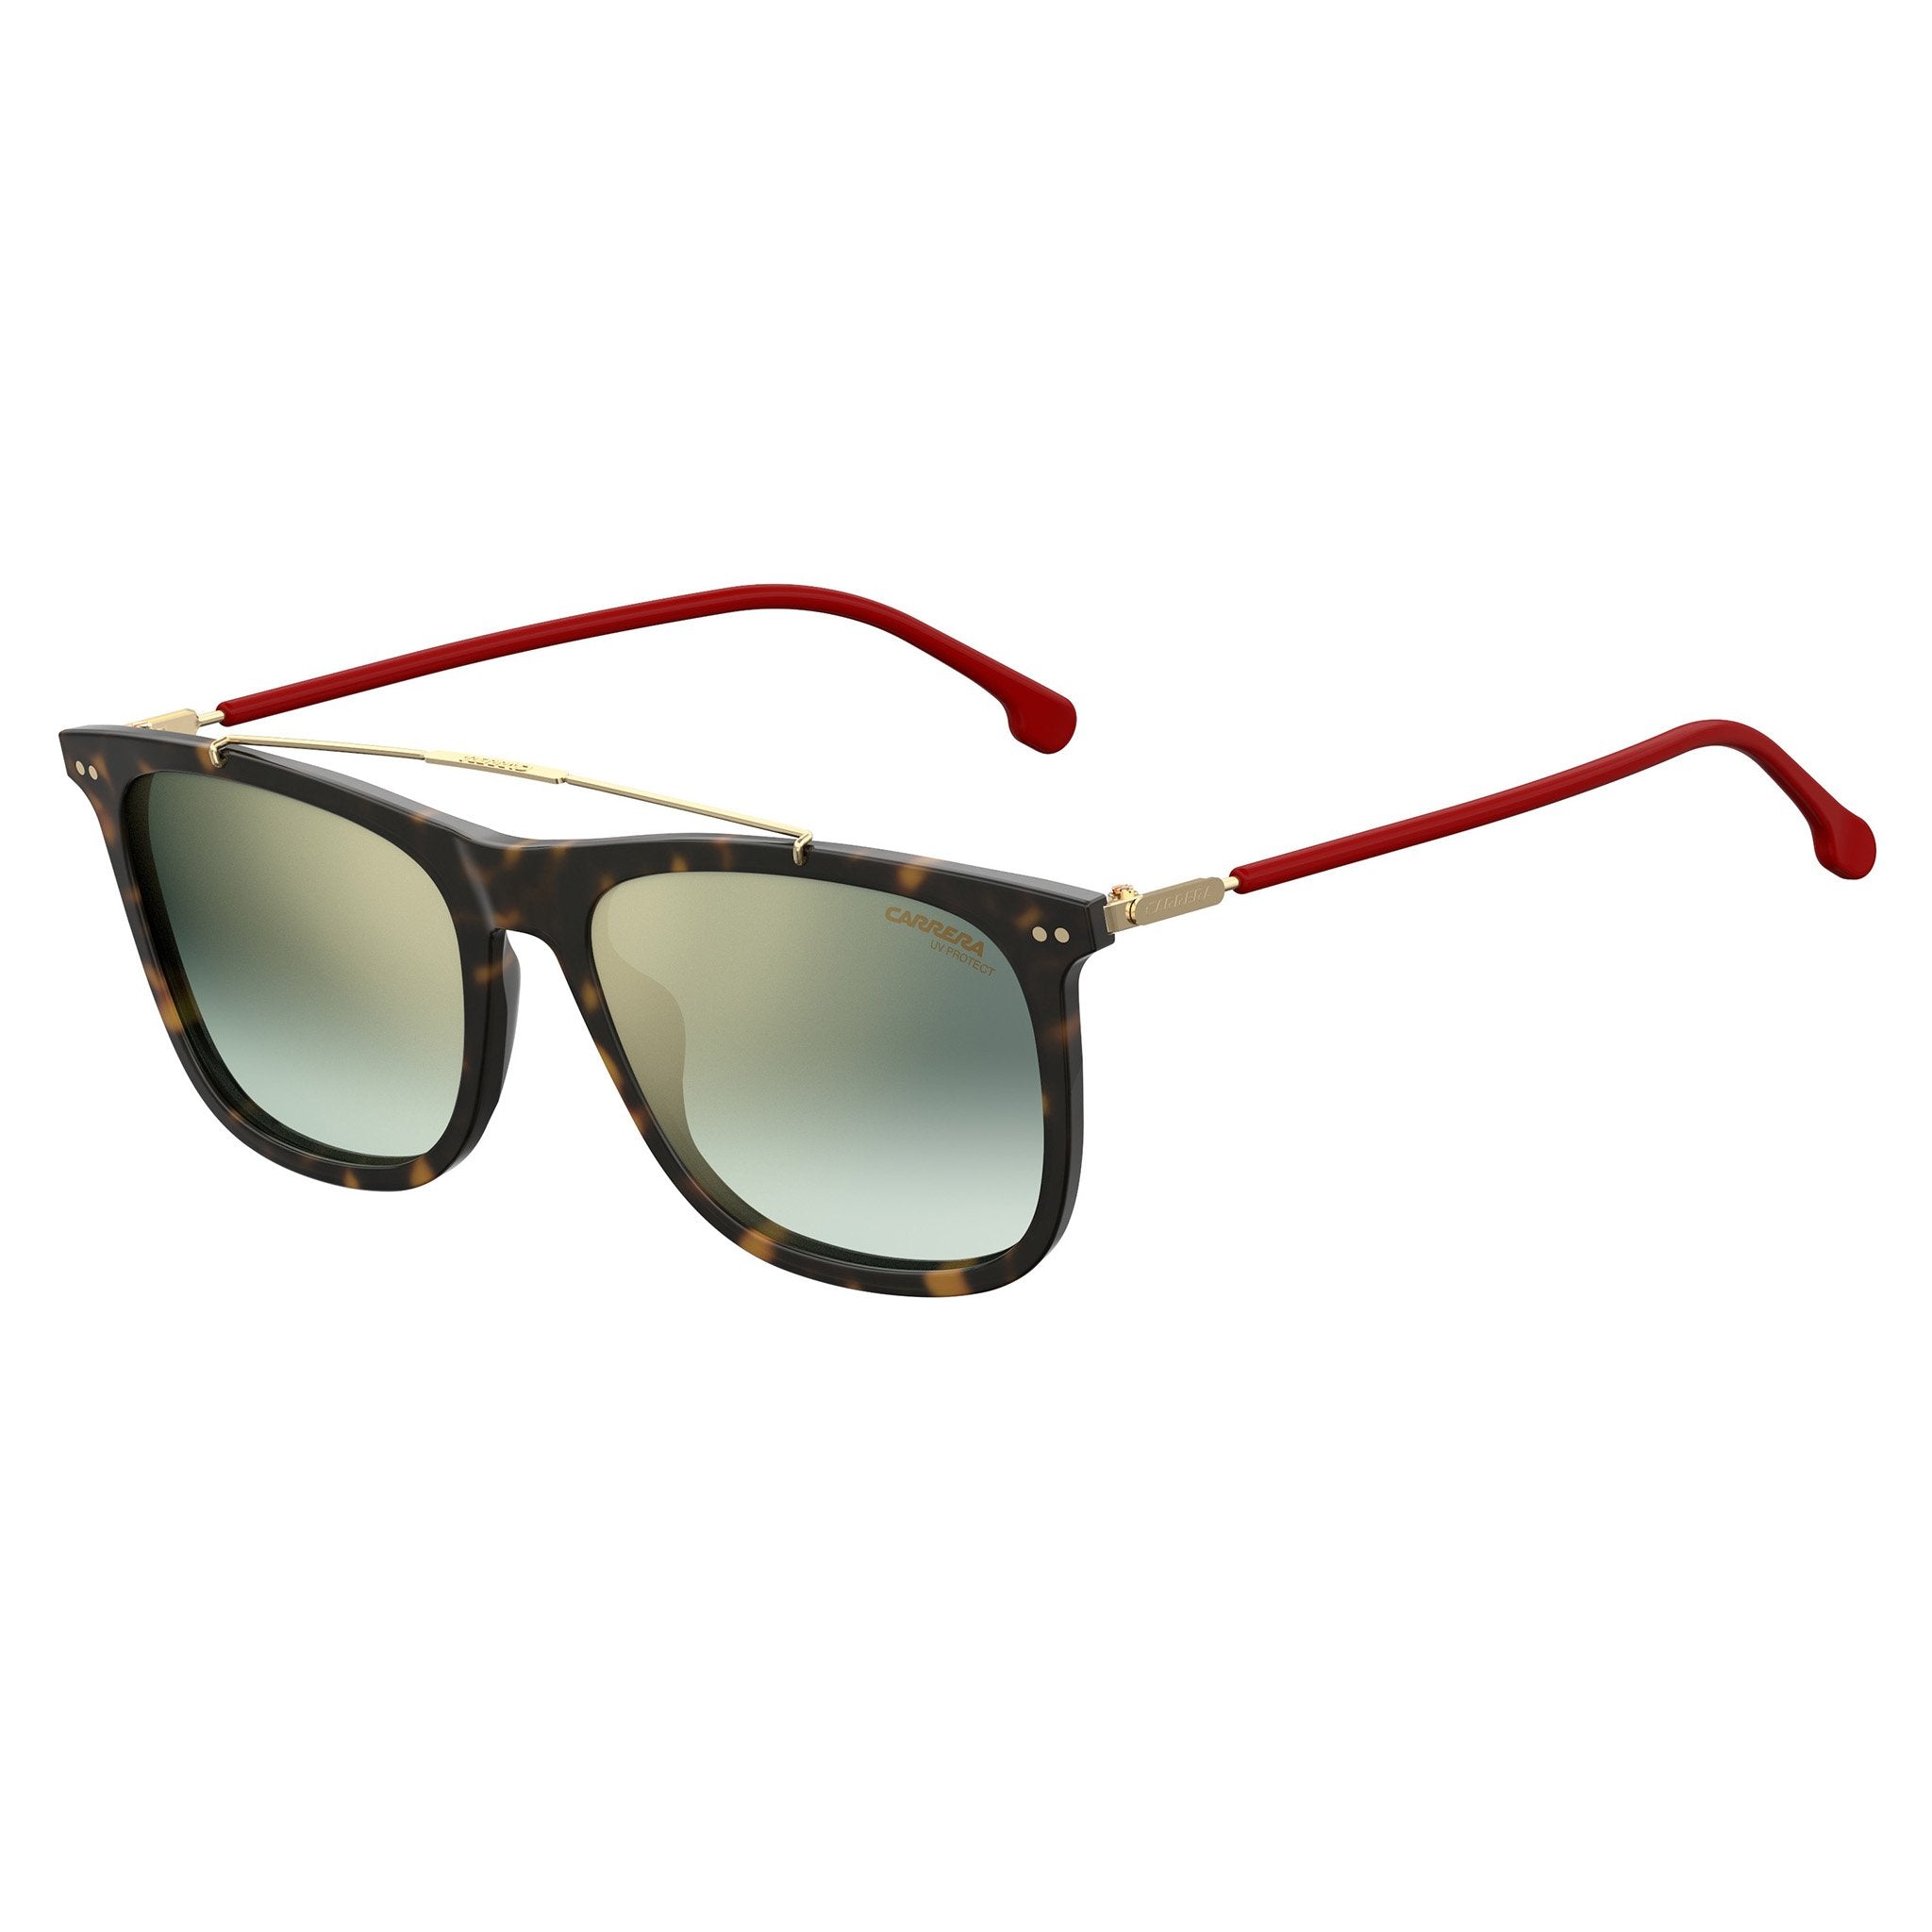 Carrera Sunglasses | The Watch Factory Australia